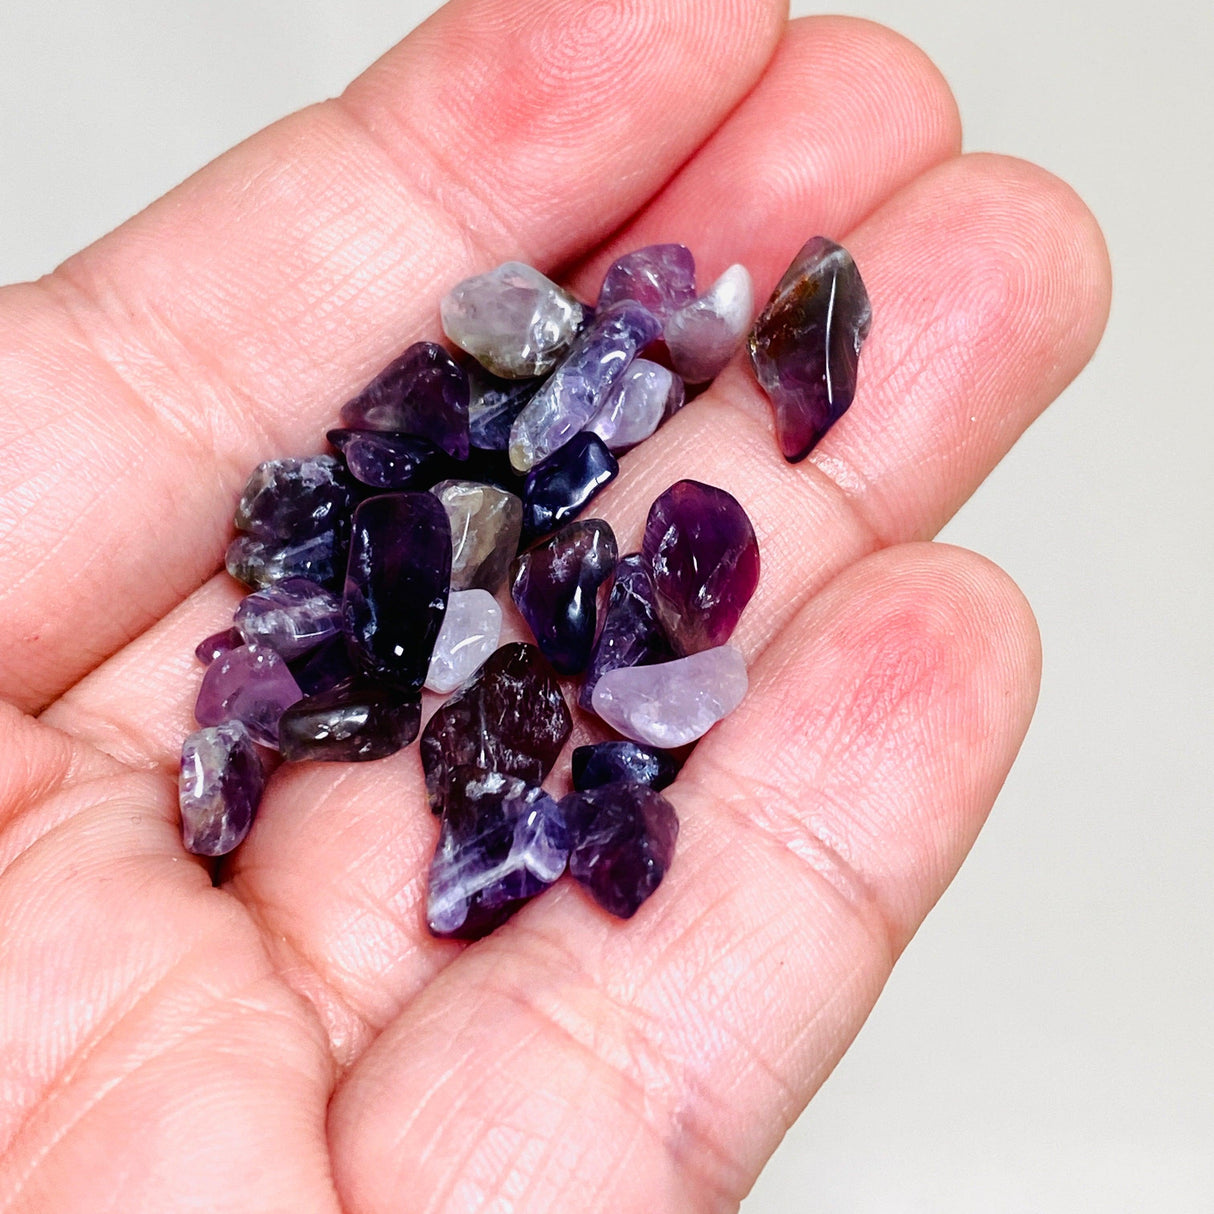 Mini Tumbled Stones (Chips) 50g - Amethyst - Nature's Magick